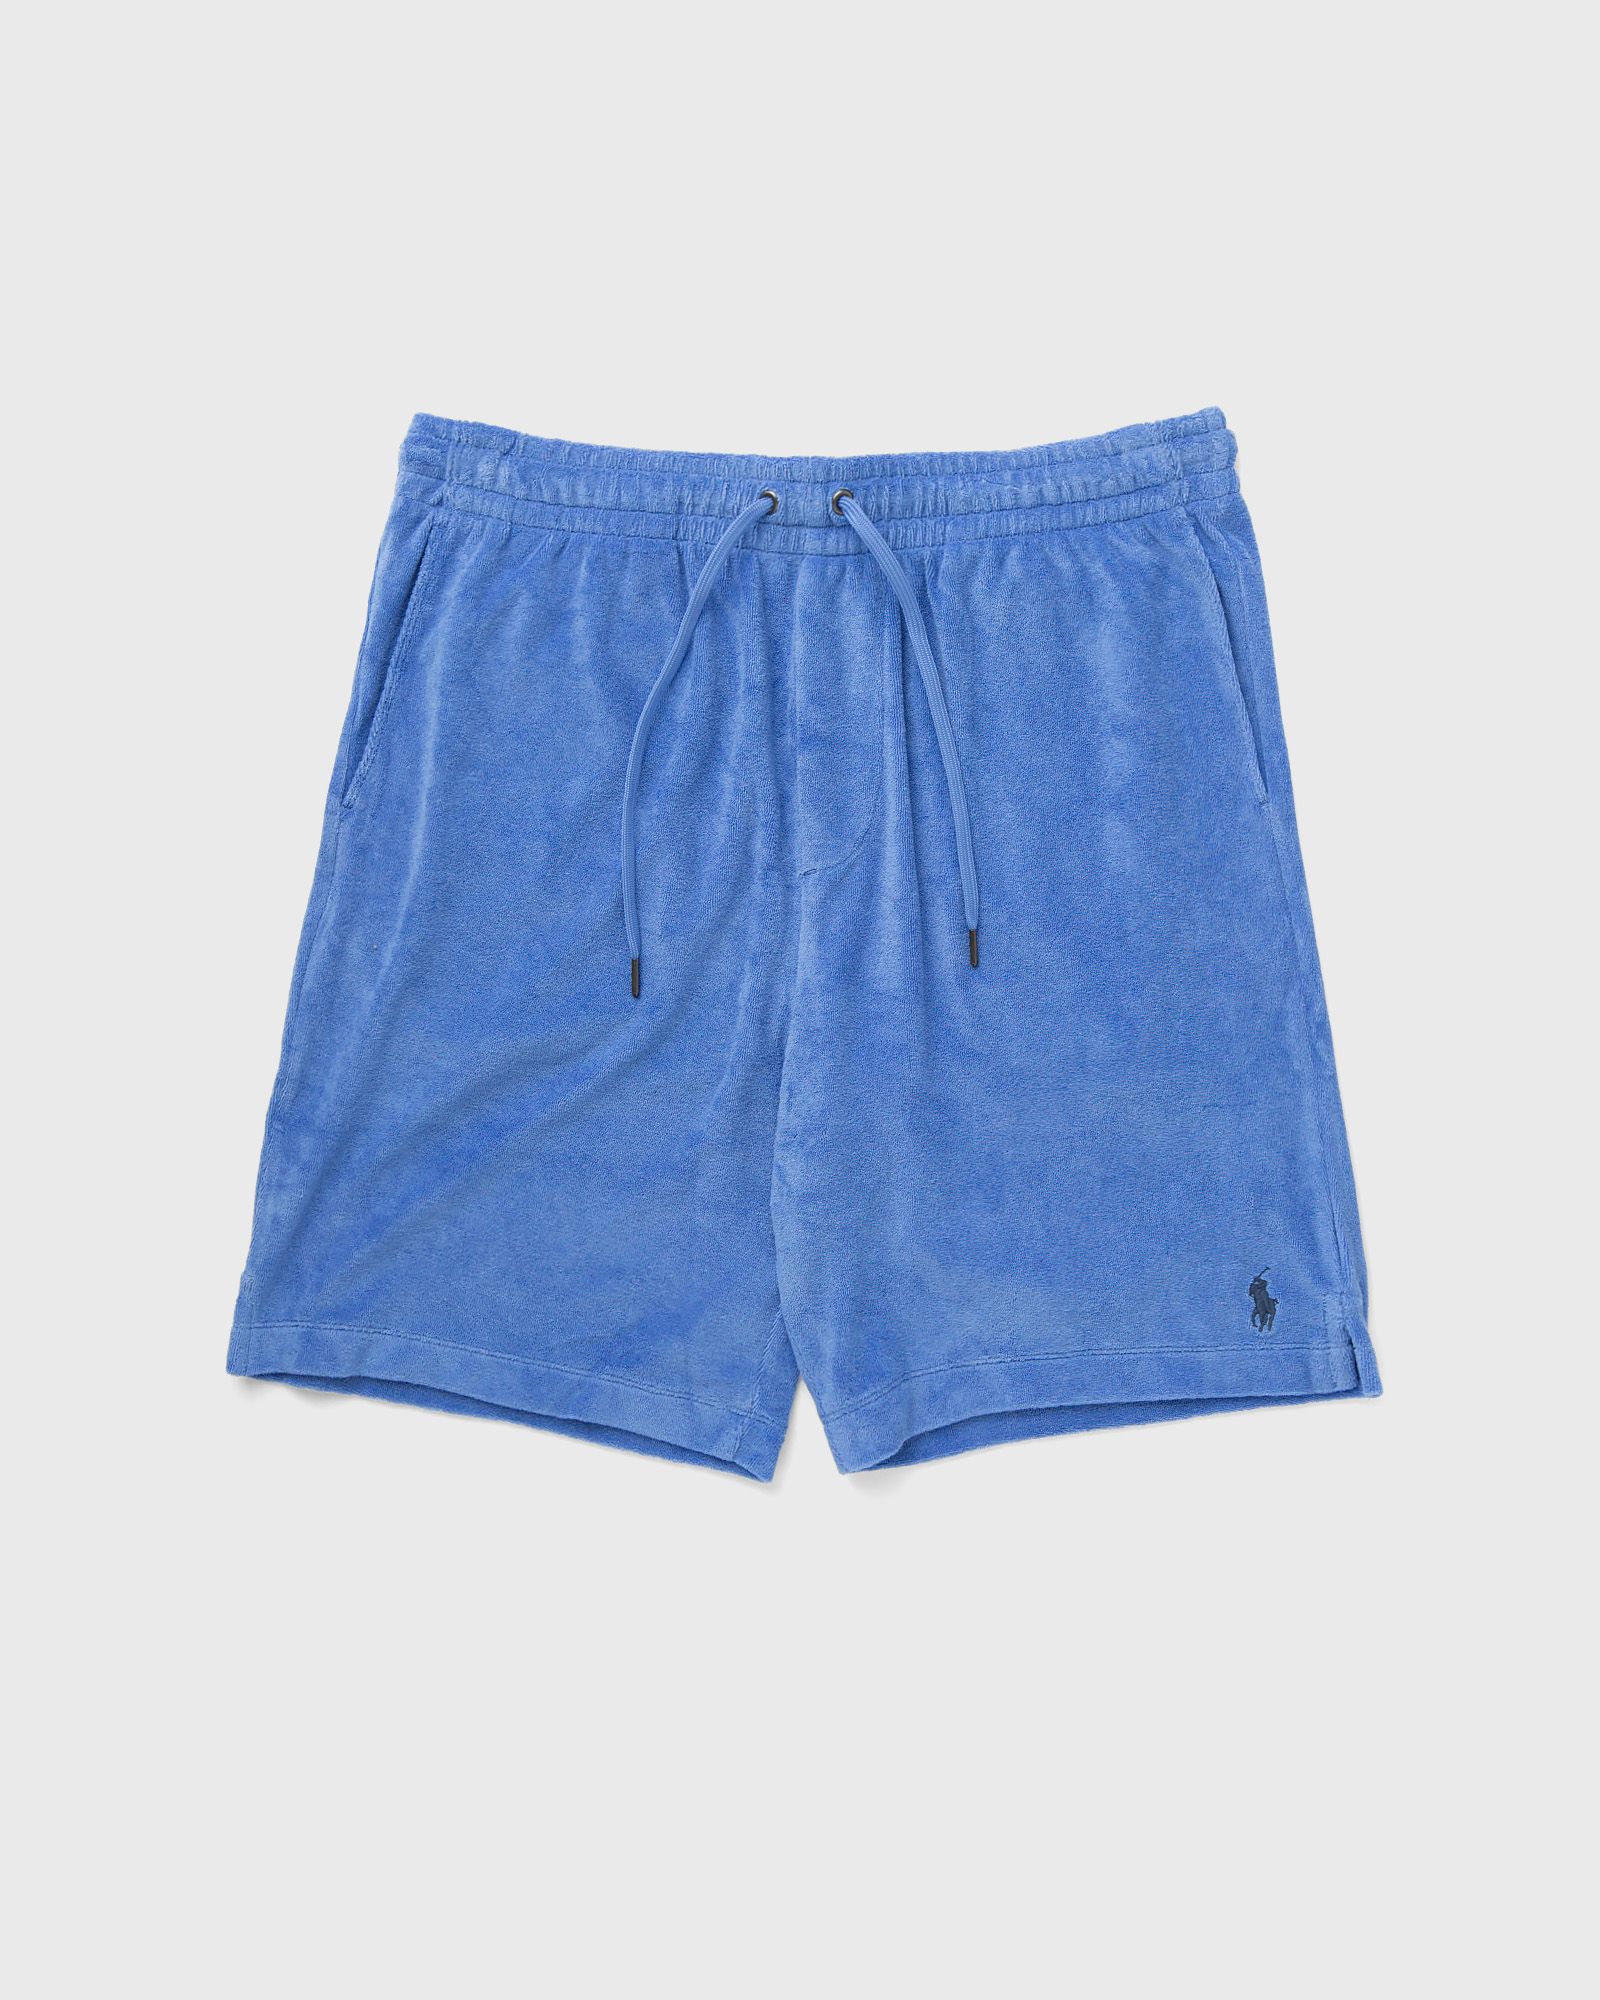 Polo Ralph Lauren - athletic shorts men casual shorts blue in größe:xl